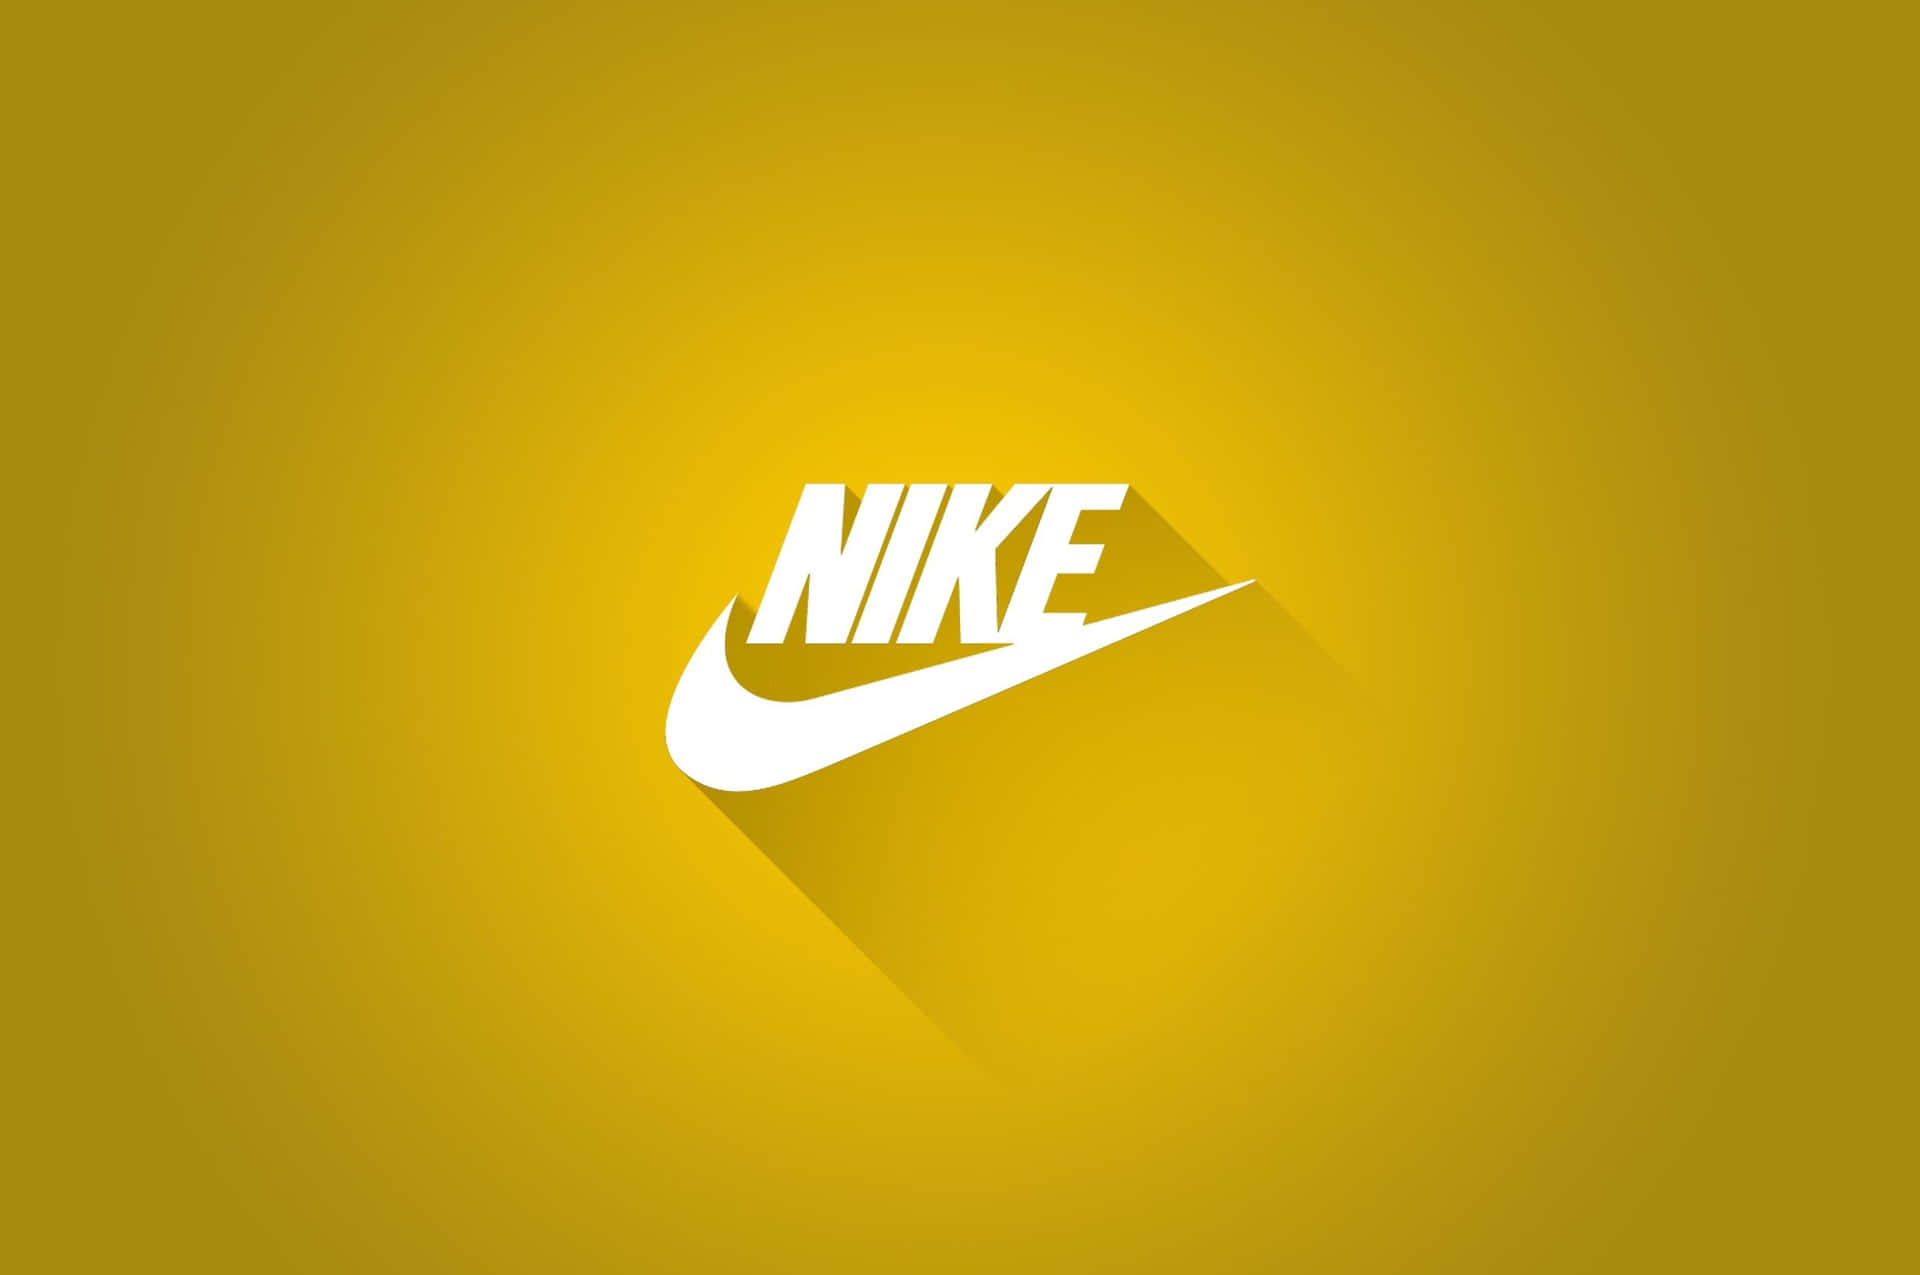 Nike's ikoniske logo Wallpaper